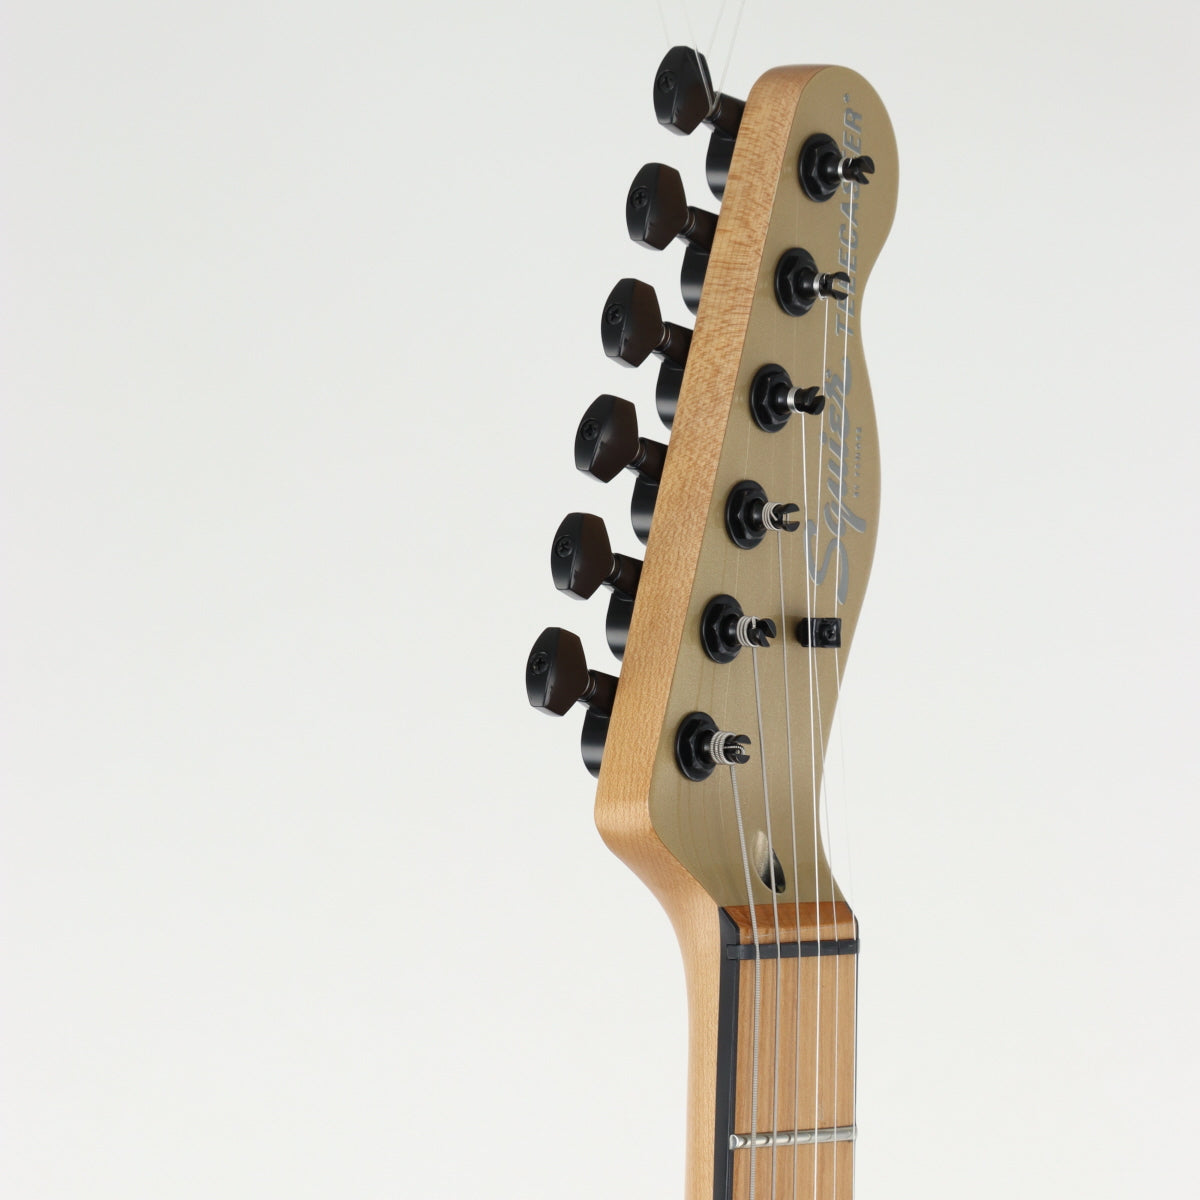 [SN CMCC22007264] USED Squier by Fender Squier / Contemporary Telecaster RH Shoreline Gold [20]